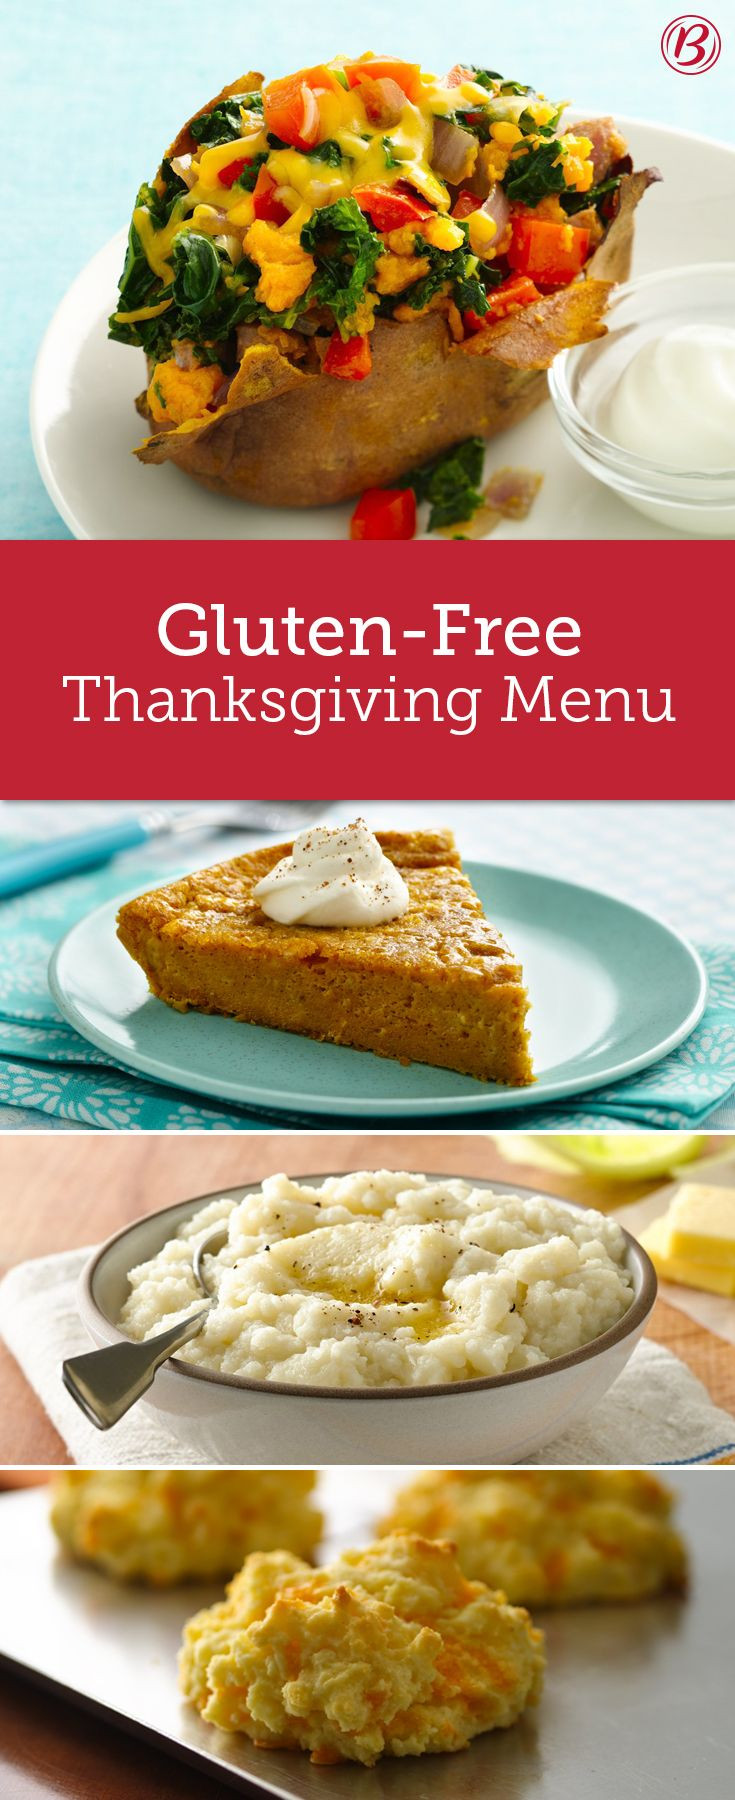 Gluten Free Thanksgiving Menu
 Gluten Free Thanksgiving Menu